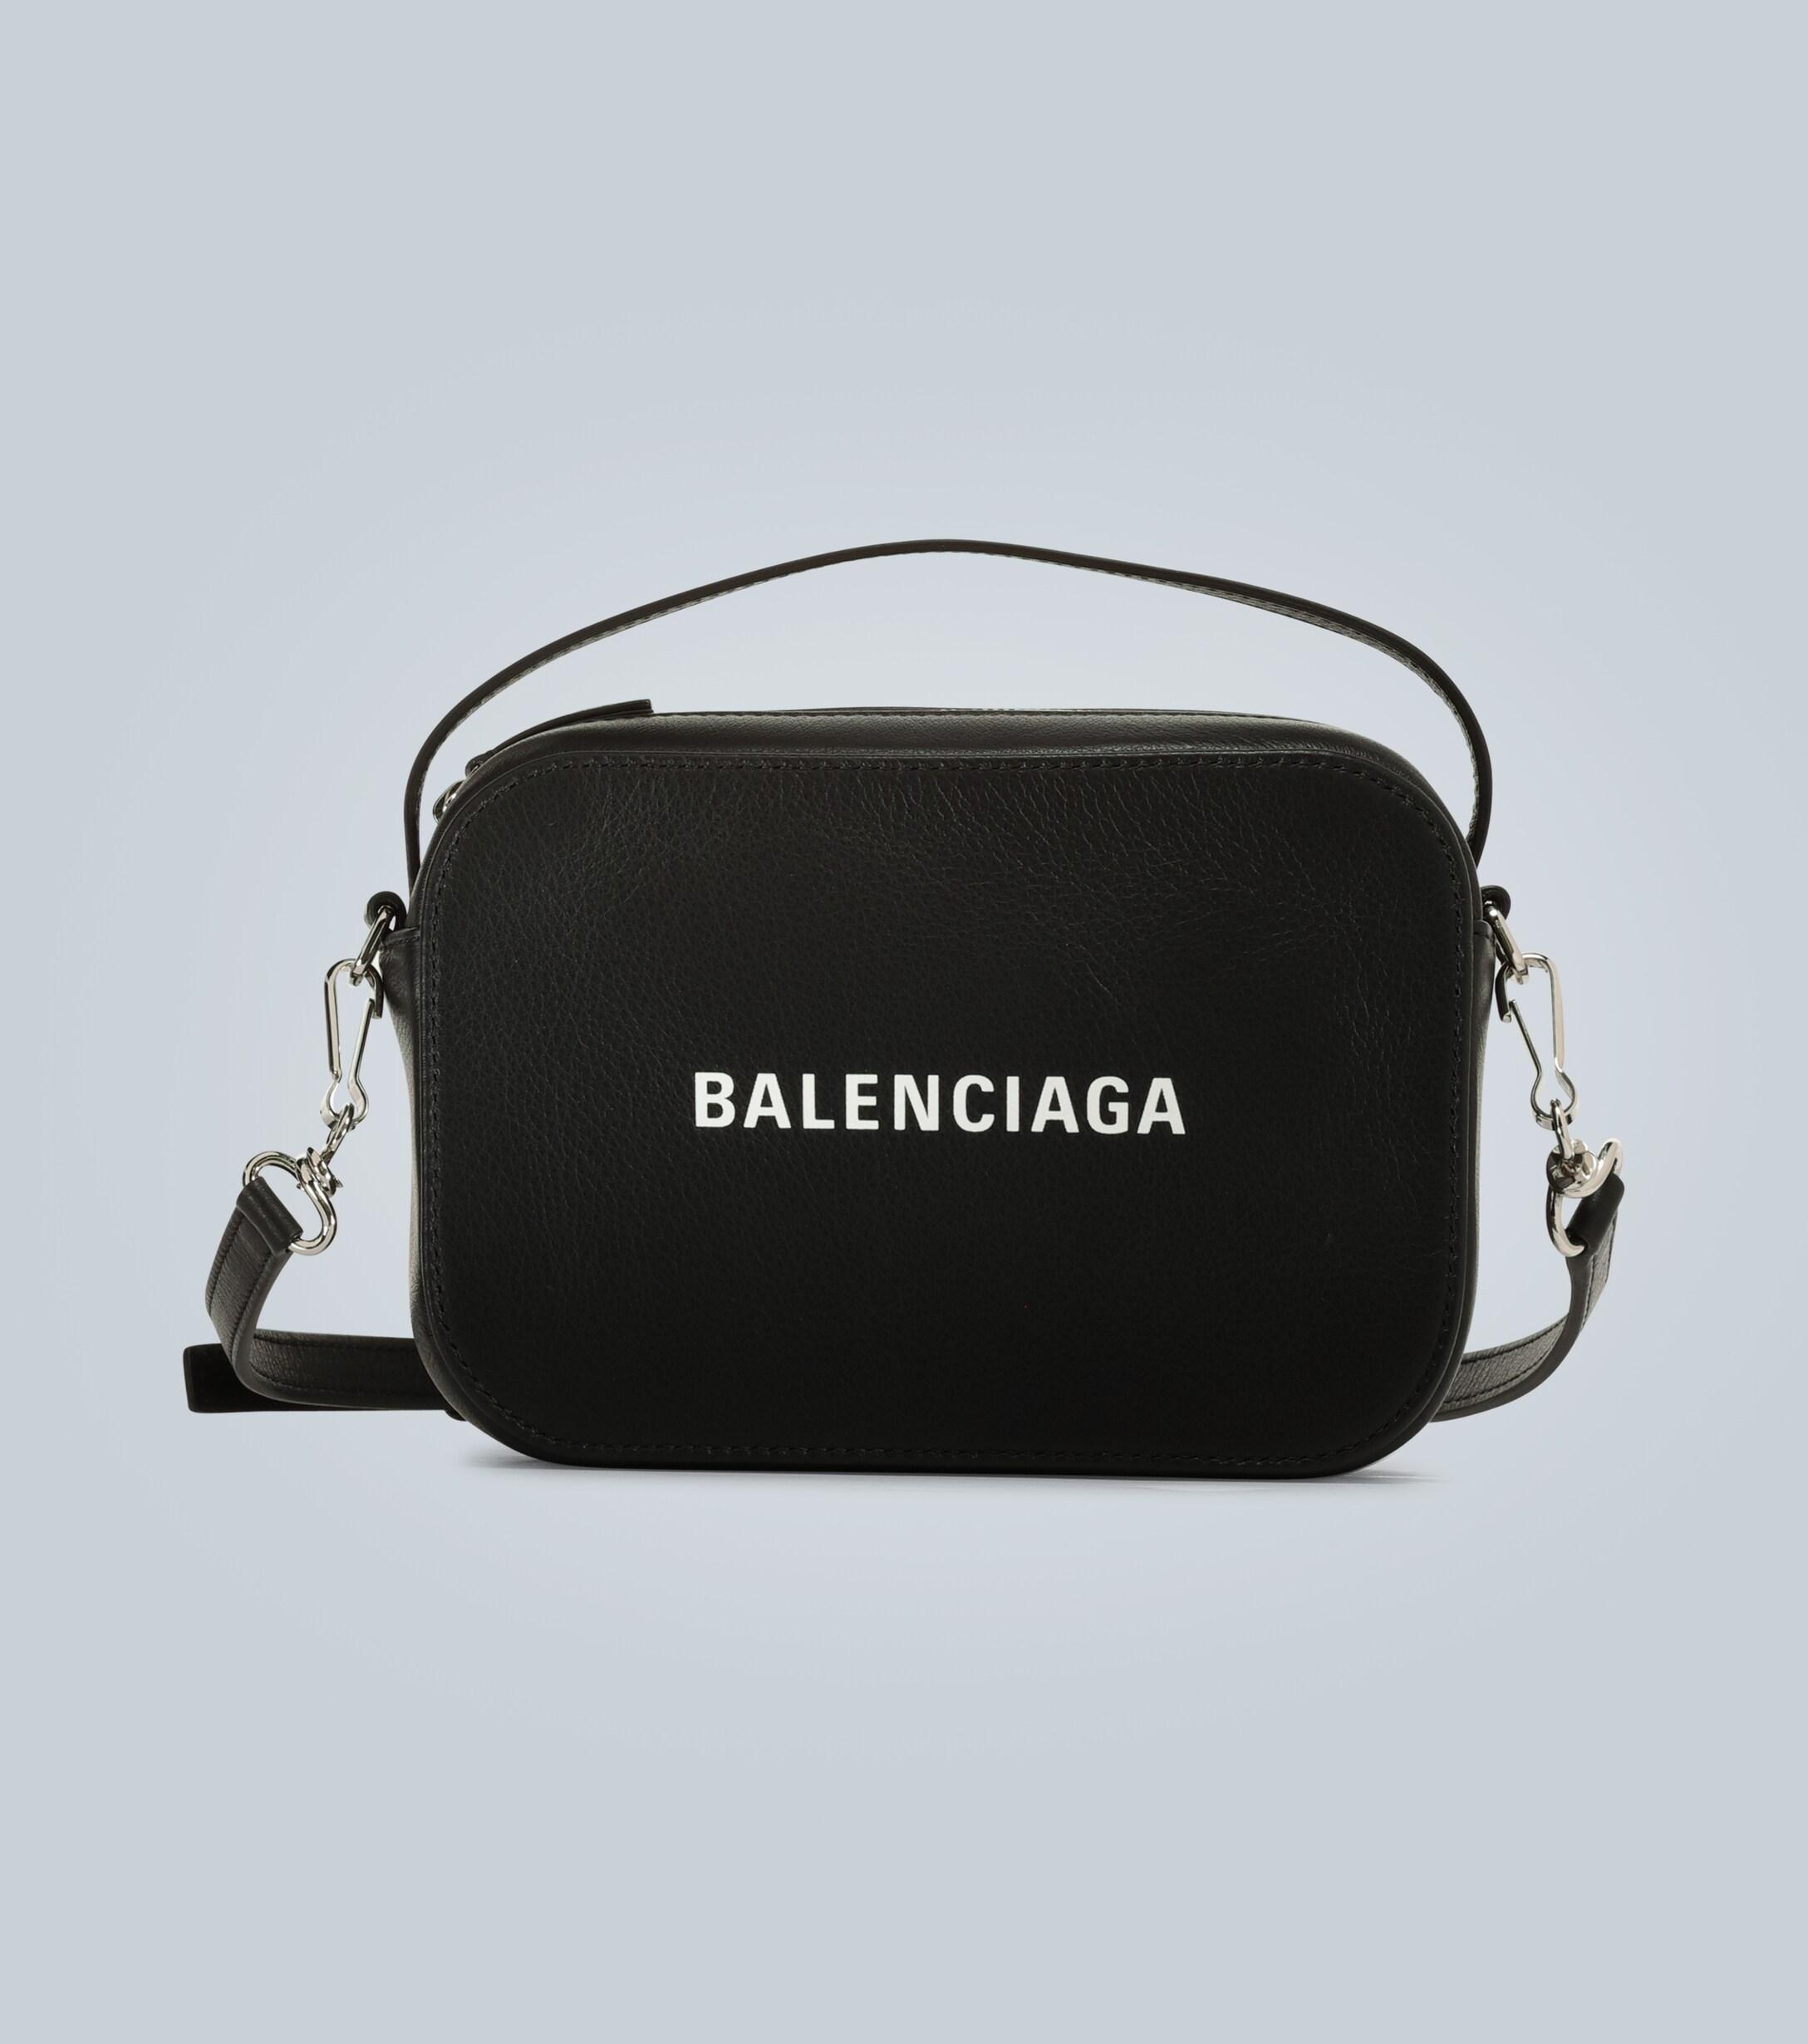 BALENCIAGA EVERYDAY #CAMERA BAG XS 750 AND #SPEEDTRAINER SNEAKER